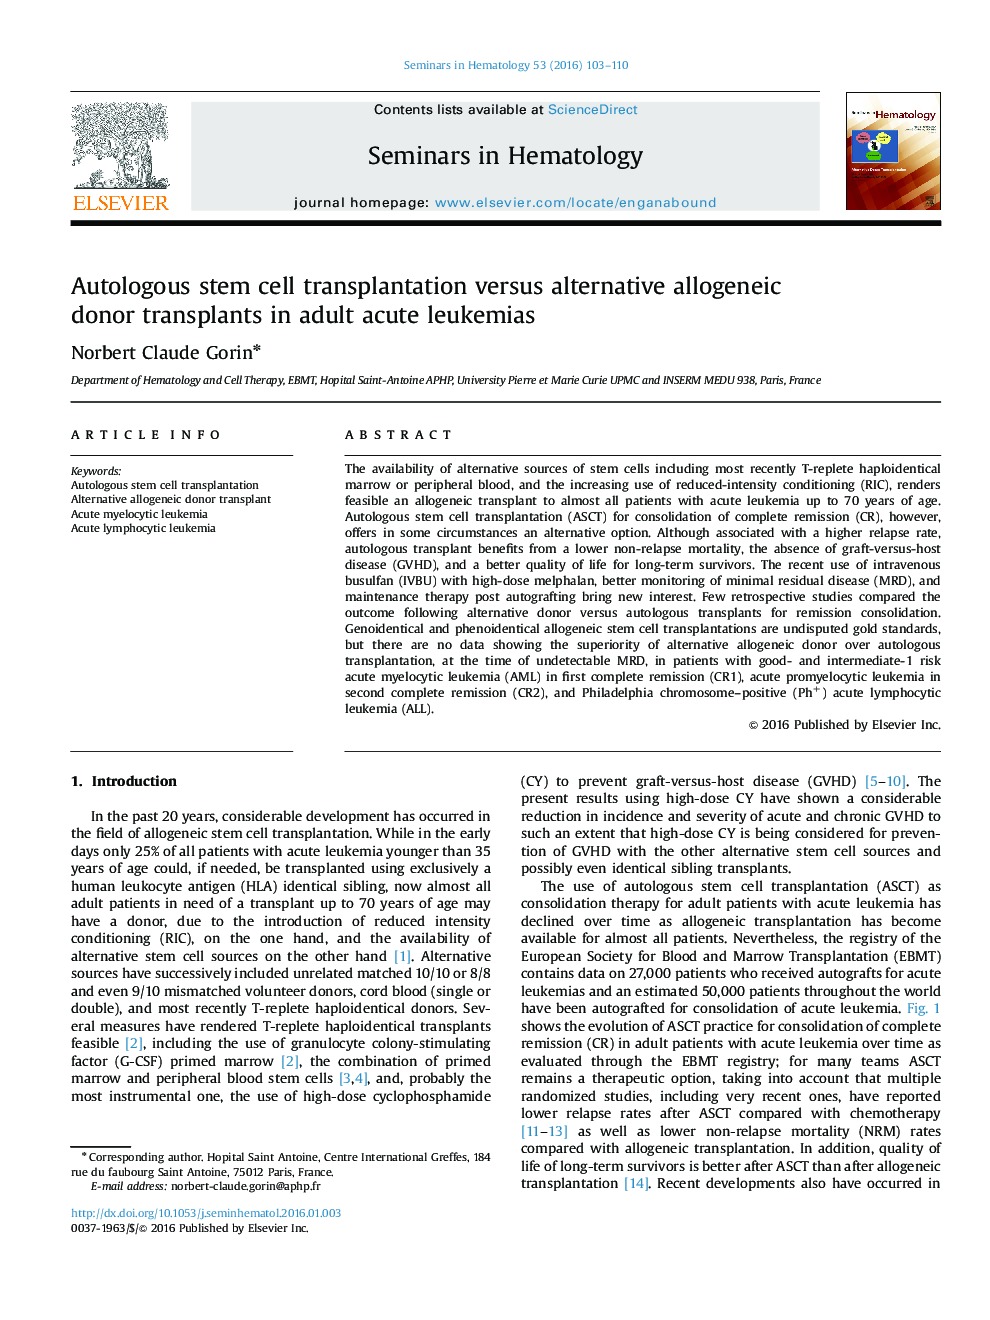 Autologous stem cell transplantation versus alternative allogeneic donor transplants in adult acute leukemias